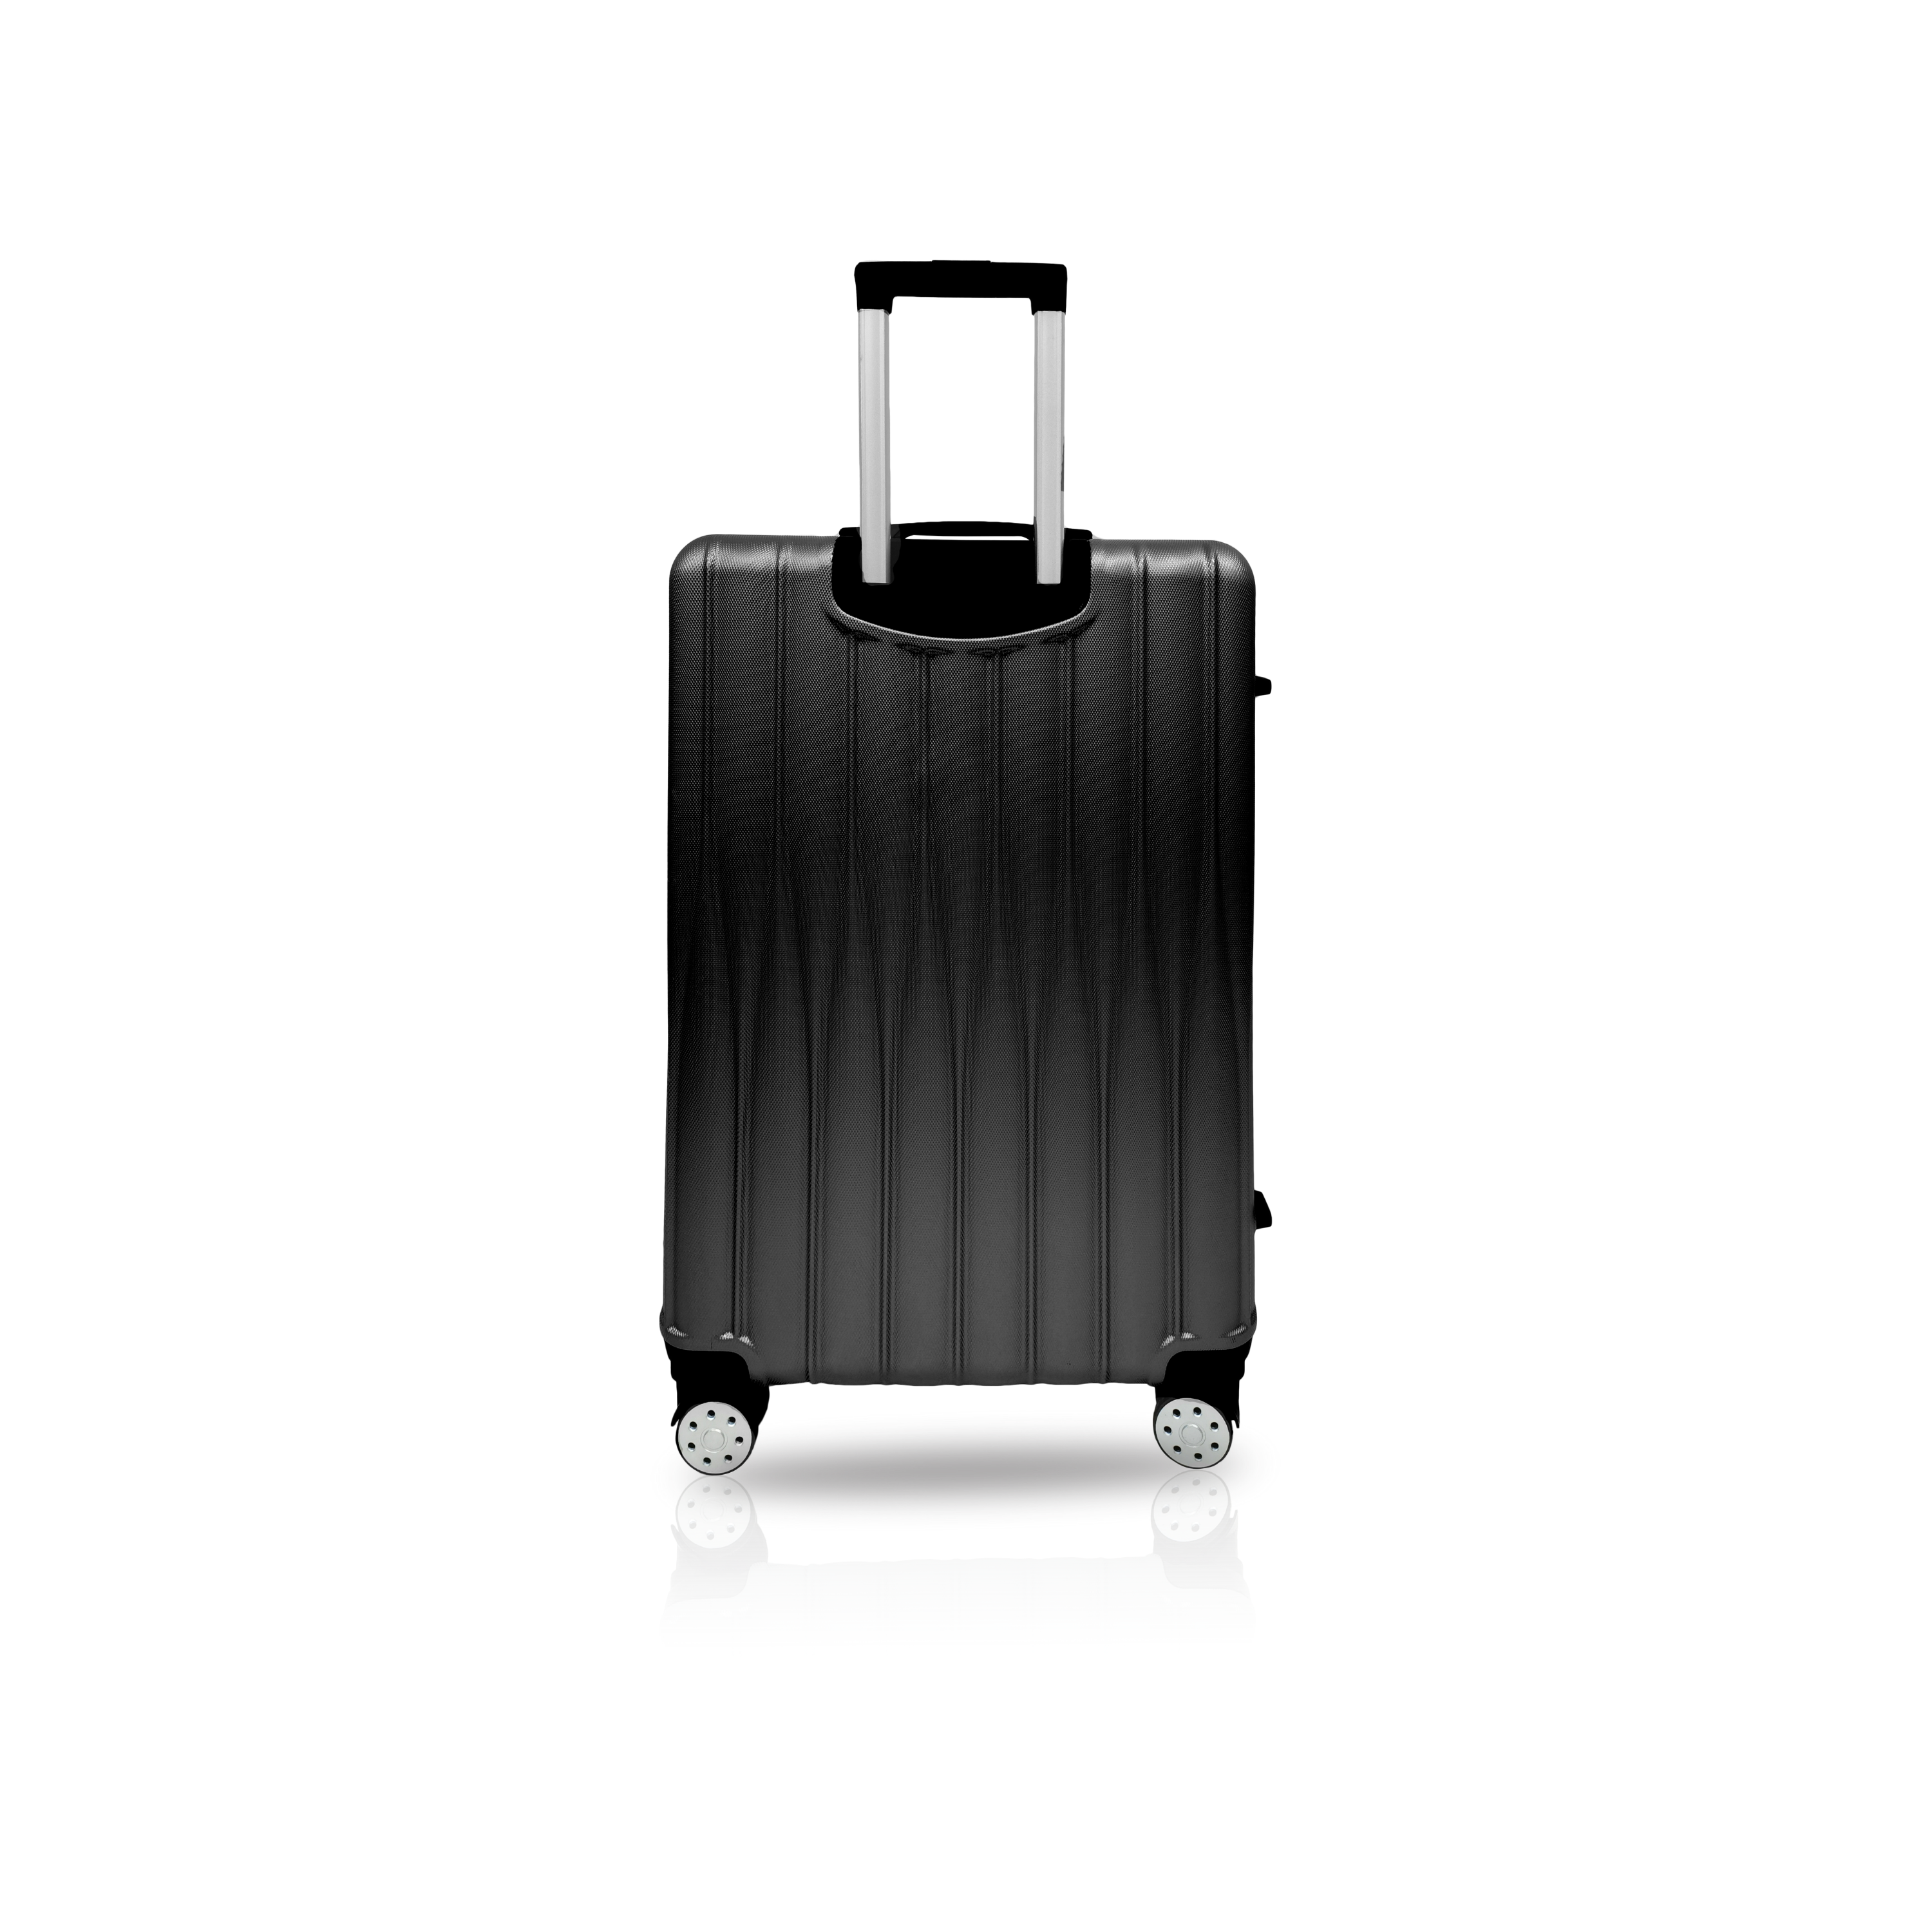 TUCCI BARATRO ABS 28" Large Luggage Suitcase